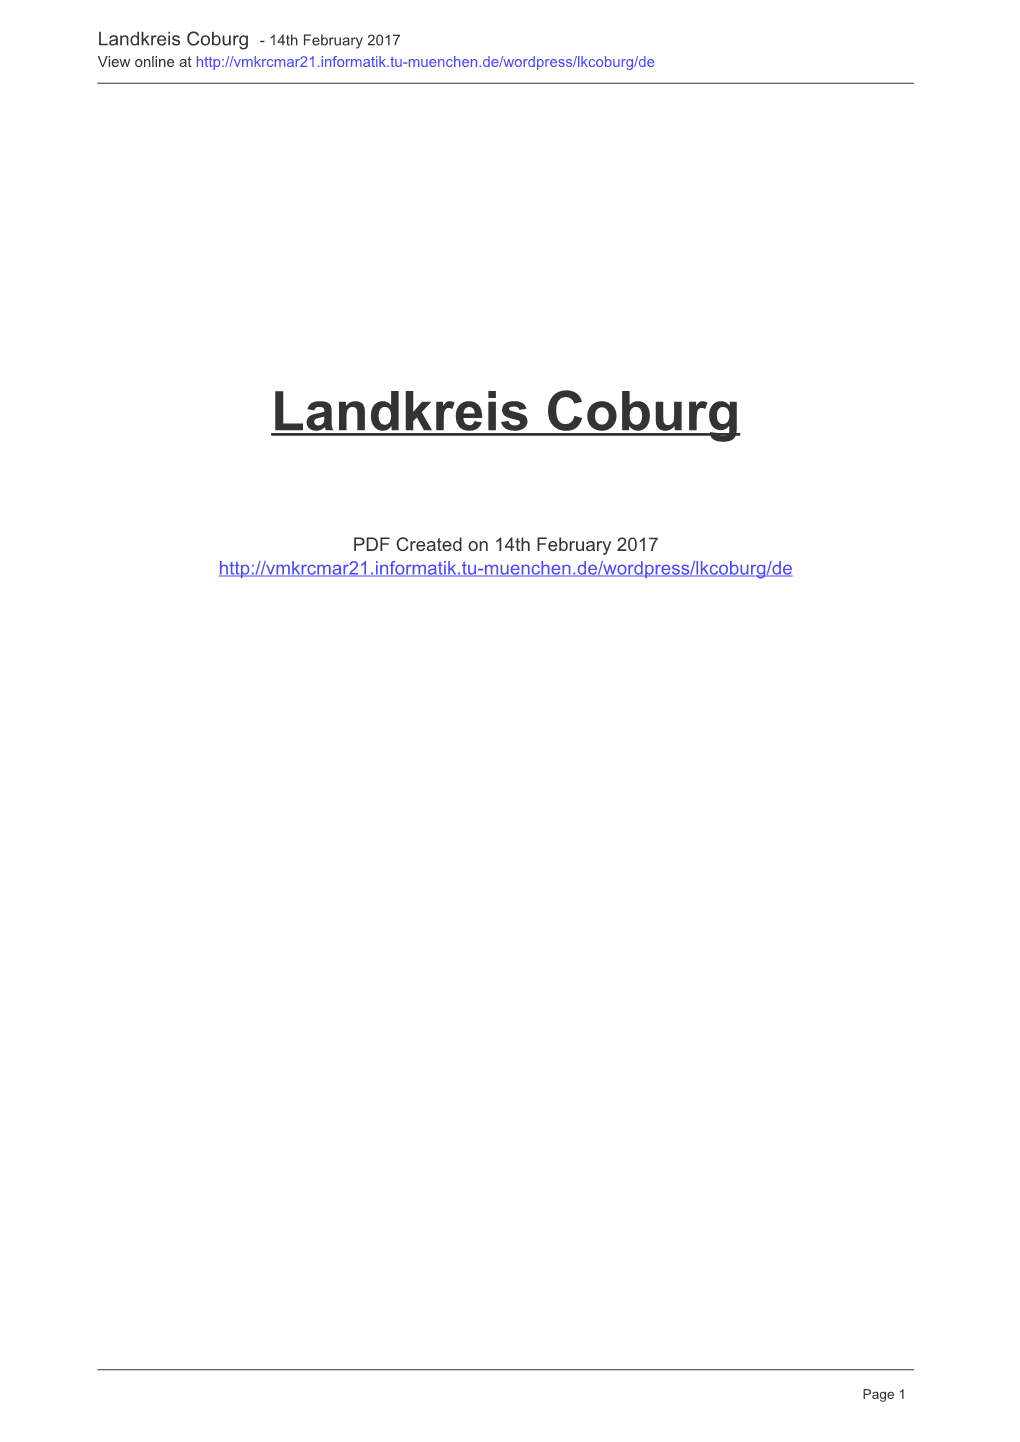 Landkreis Coburg - 14Th February 2017 View Online At